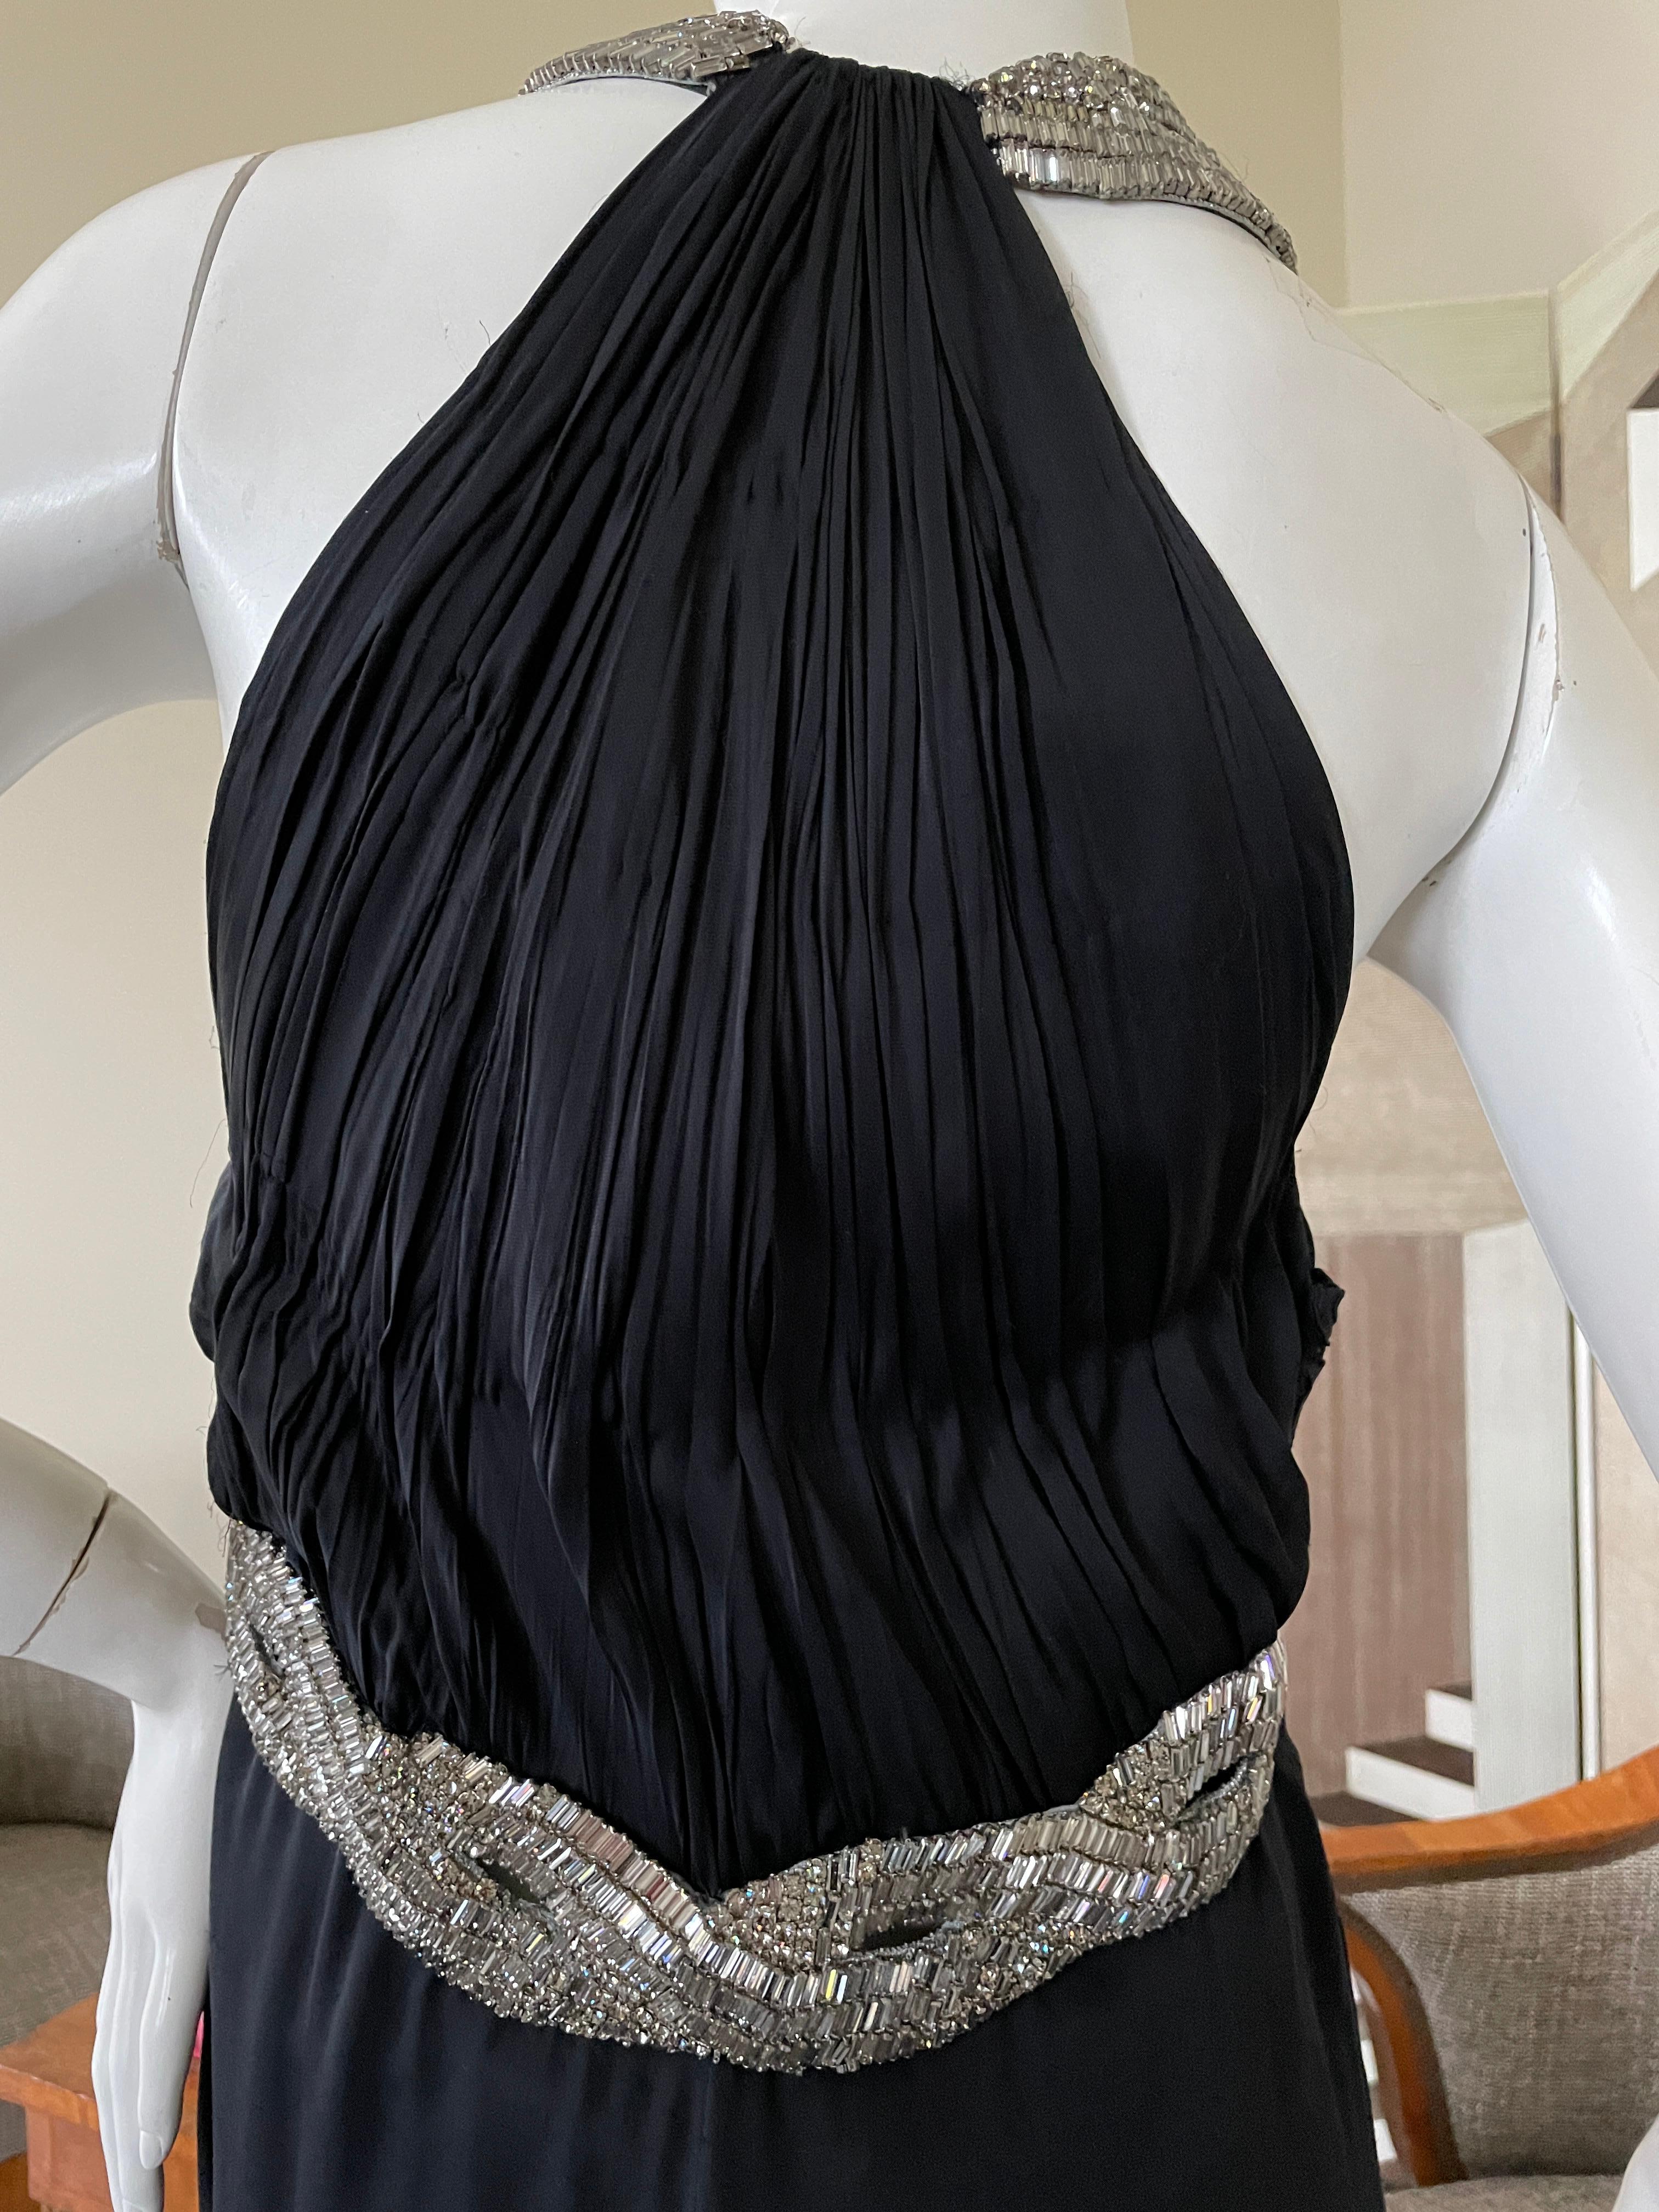  Roberto Cavalli Vintage Black Dress with Extravagant Crystal Baguette Ornaments For Sale 3